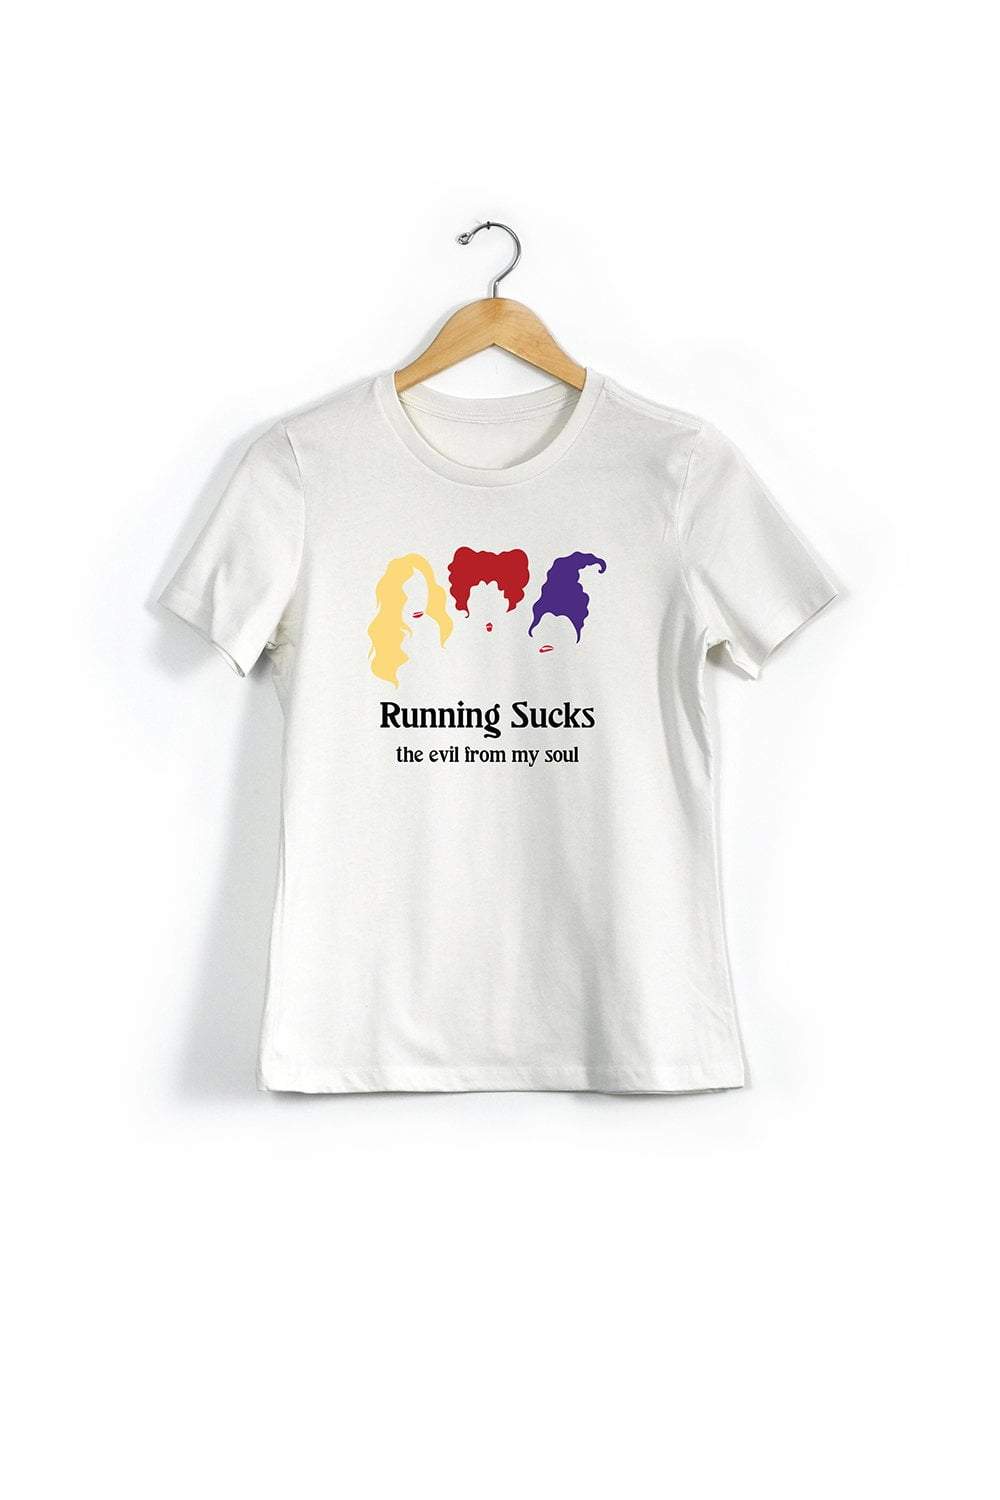 Sarah Marie Design Studio Women's Tee Running Sucks Hocus Pocus Women's t-shirt